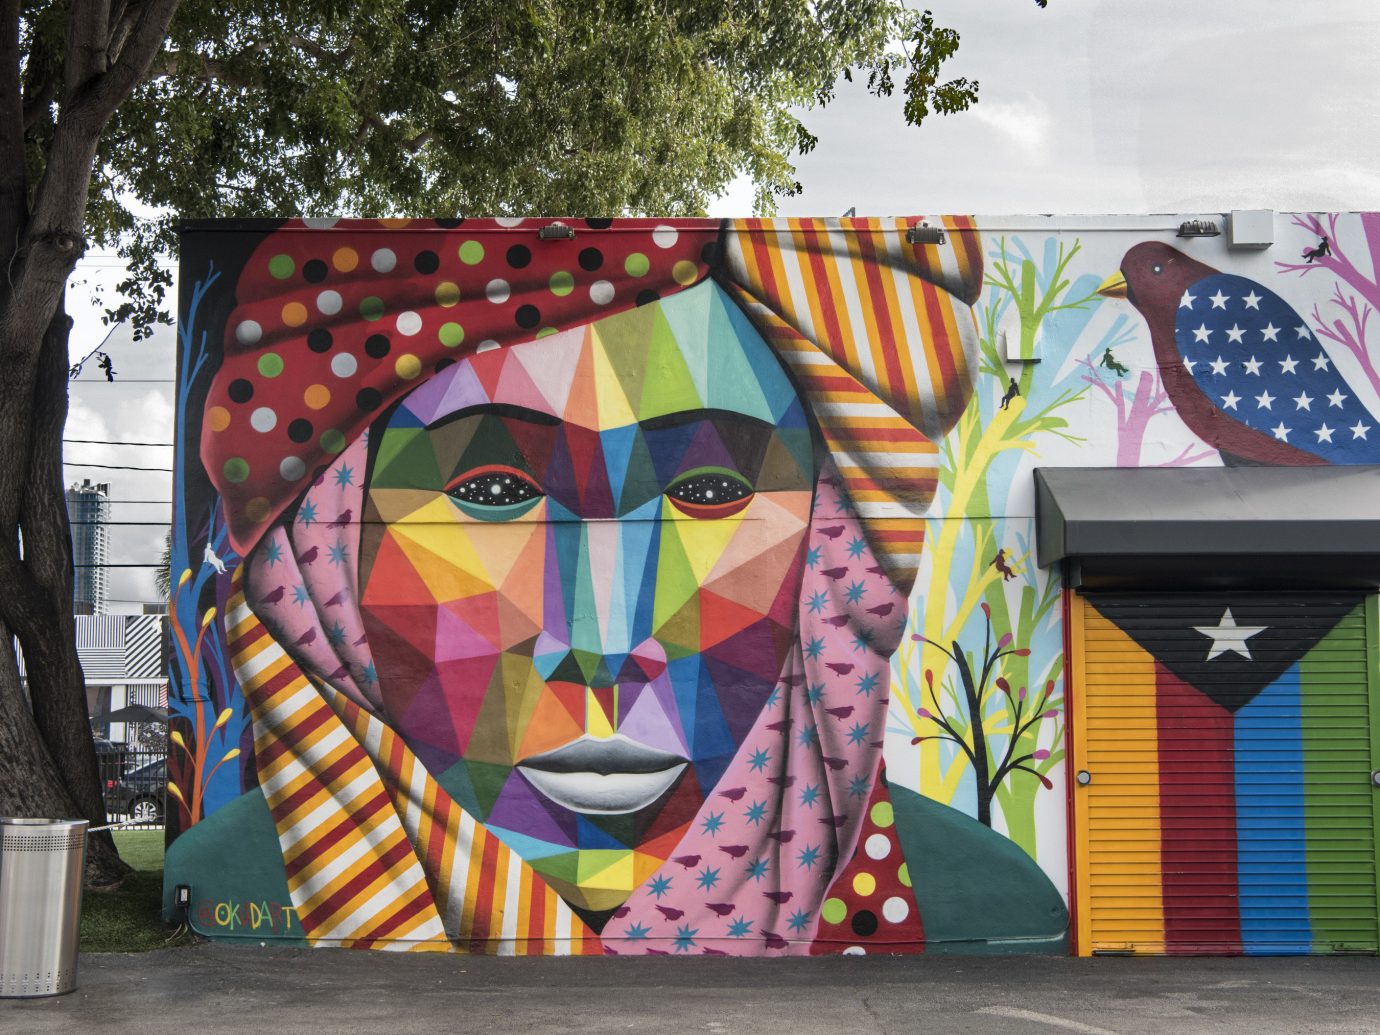 Trip Ideas tree outdoor color street art art graffiti mural colorful urban area colored decorated